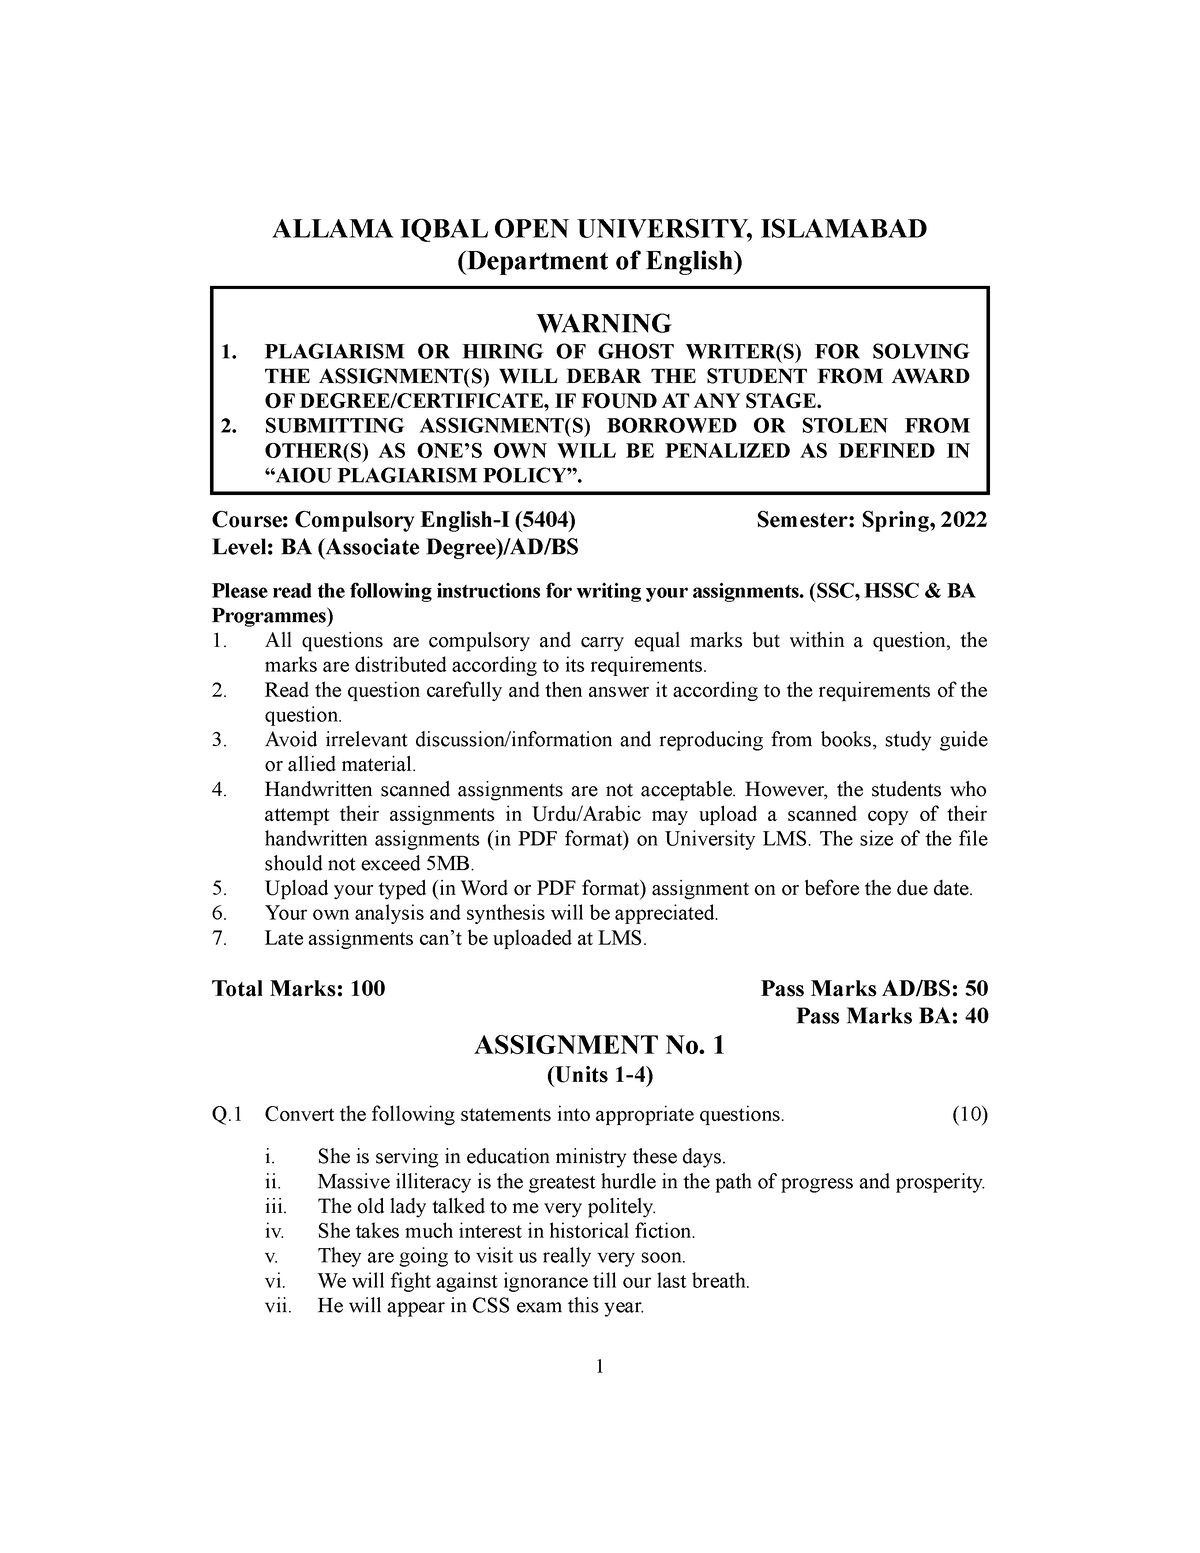 allama iqbal open university assignment marks form